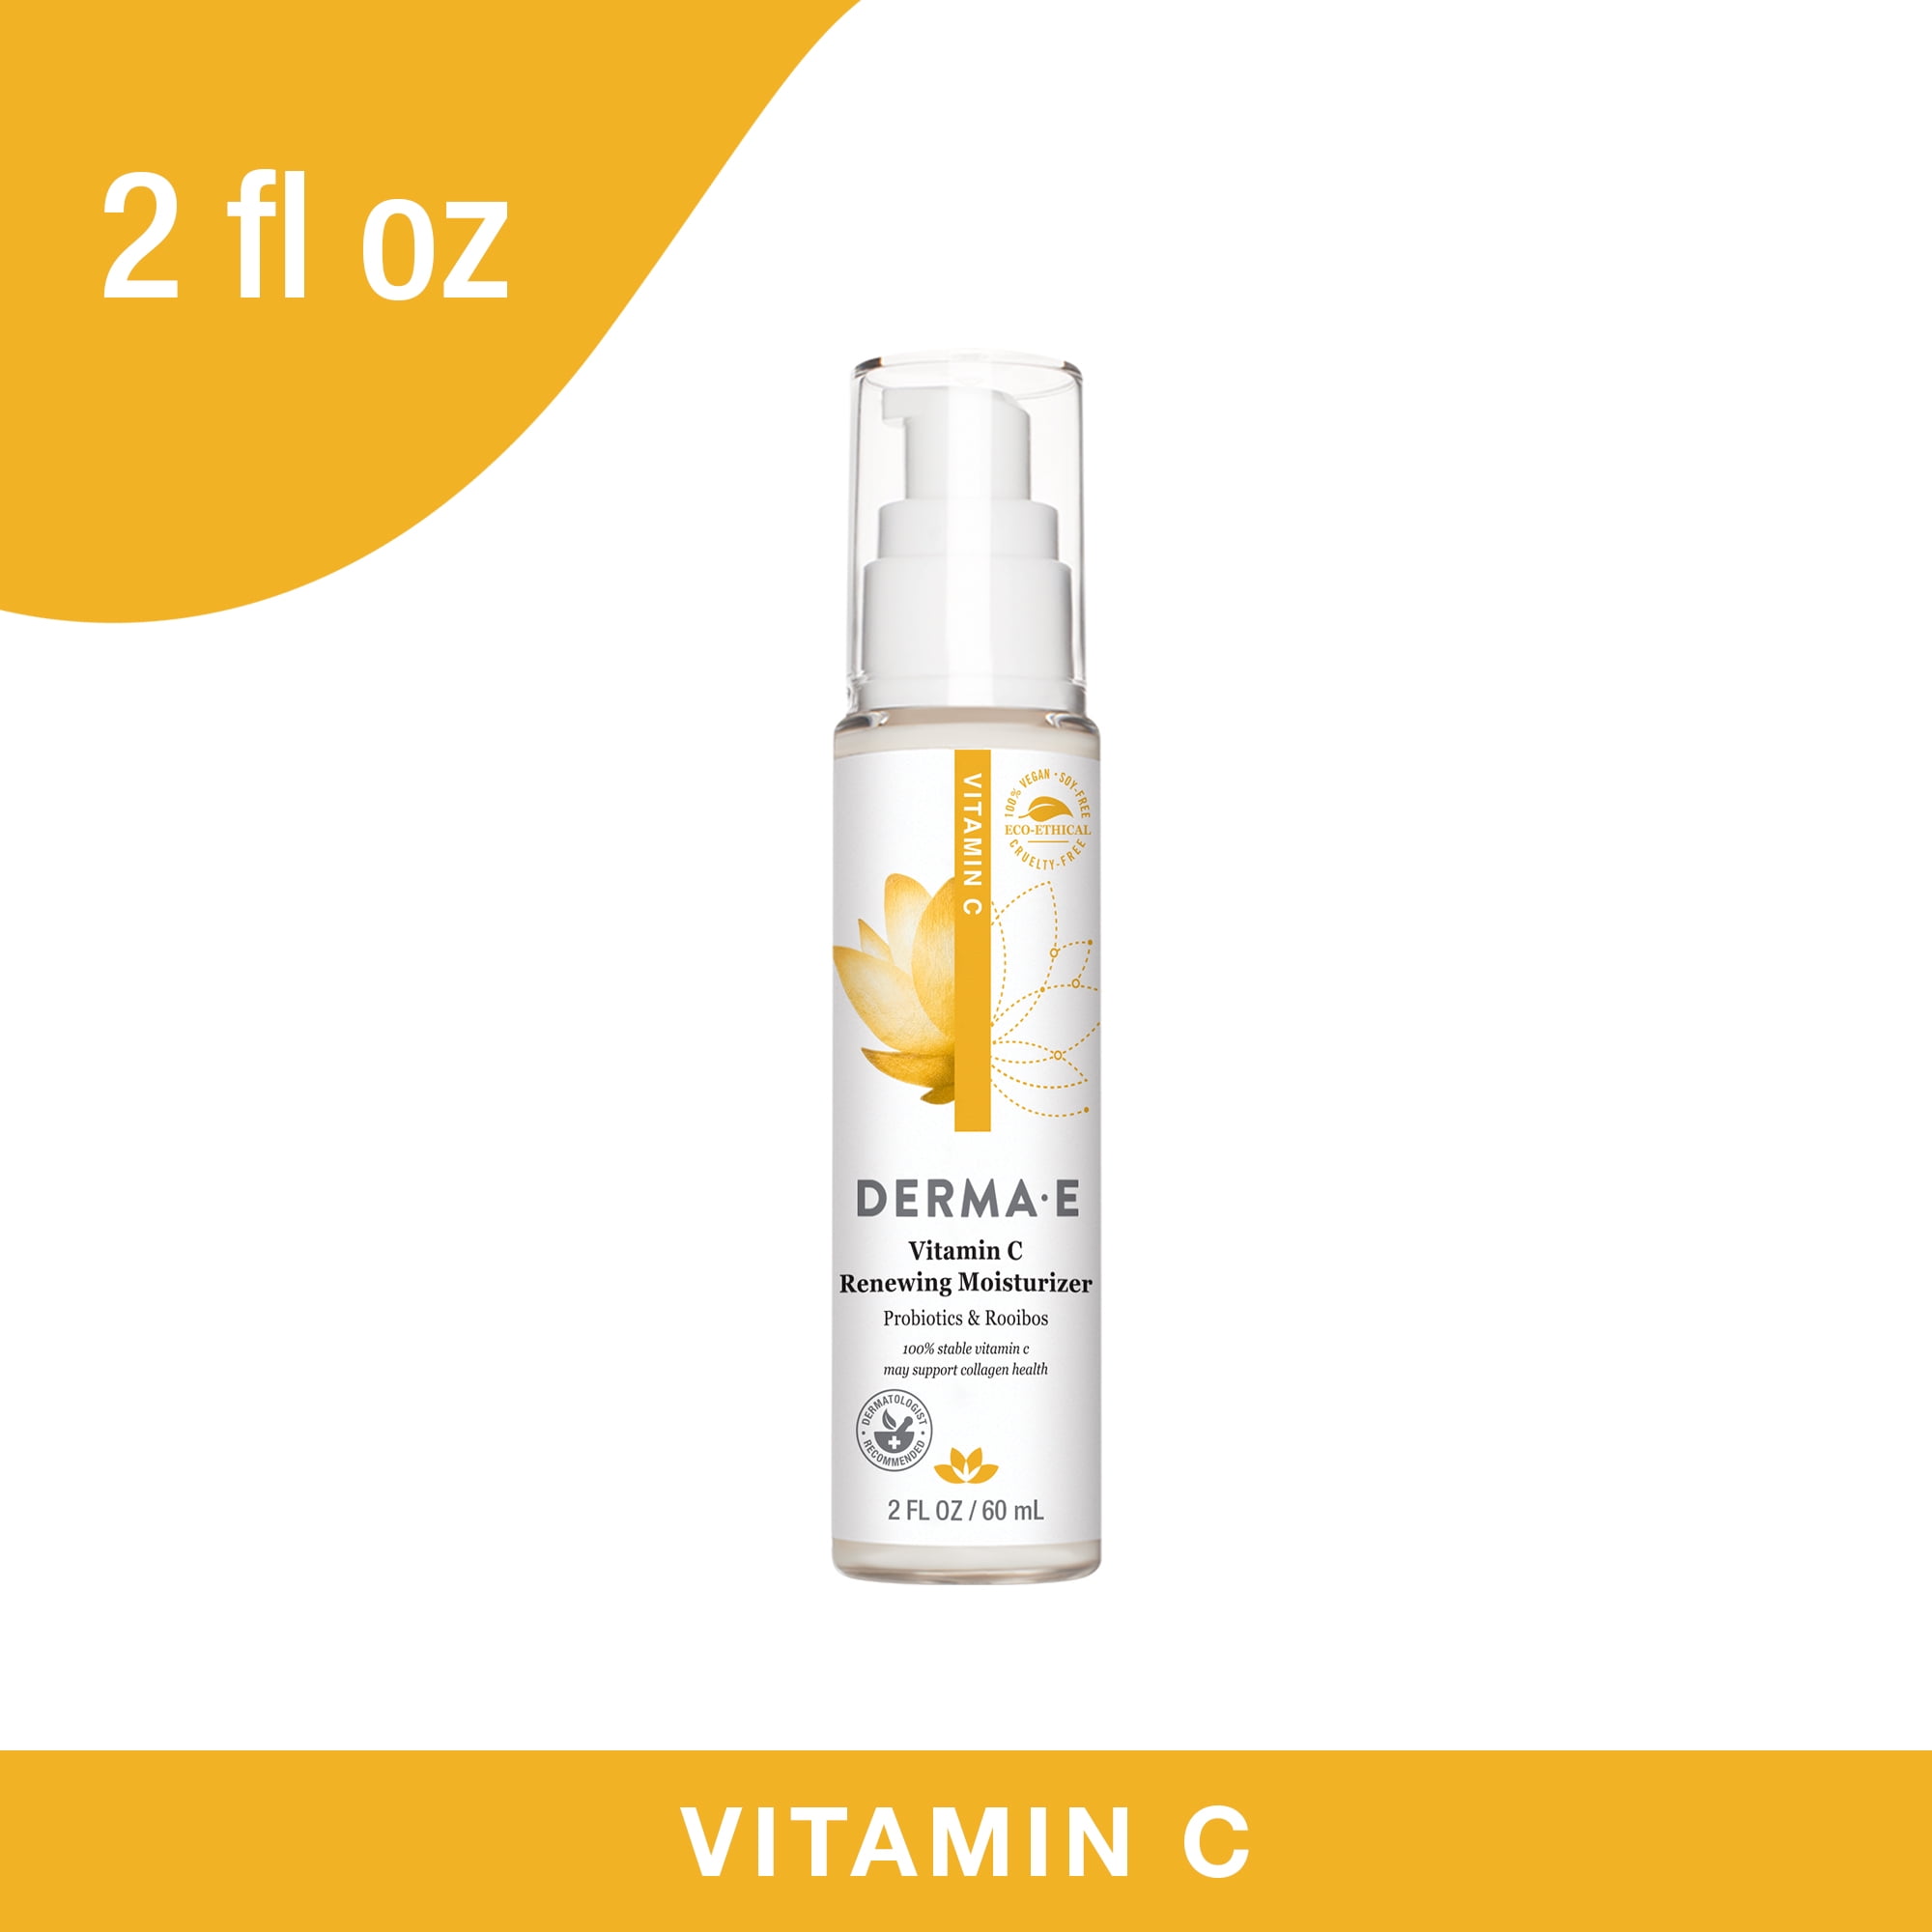 Derma E Vitamin C Brightening Moisturizer for Face with Roobios & Probiotics, Vegan Skin Care, 2 oz